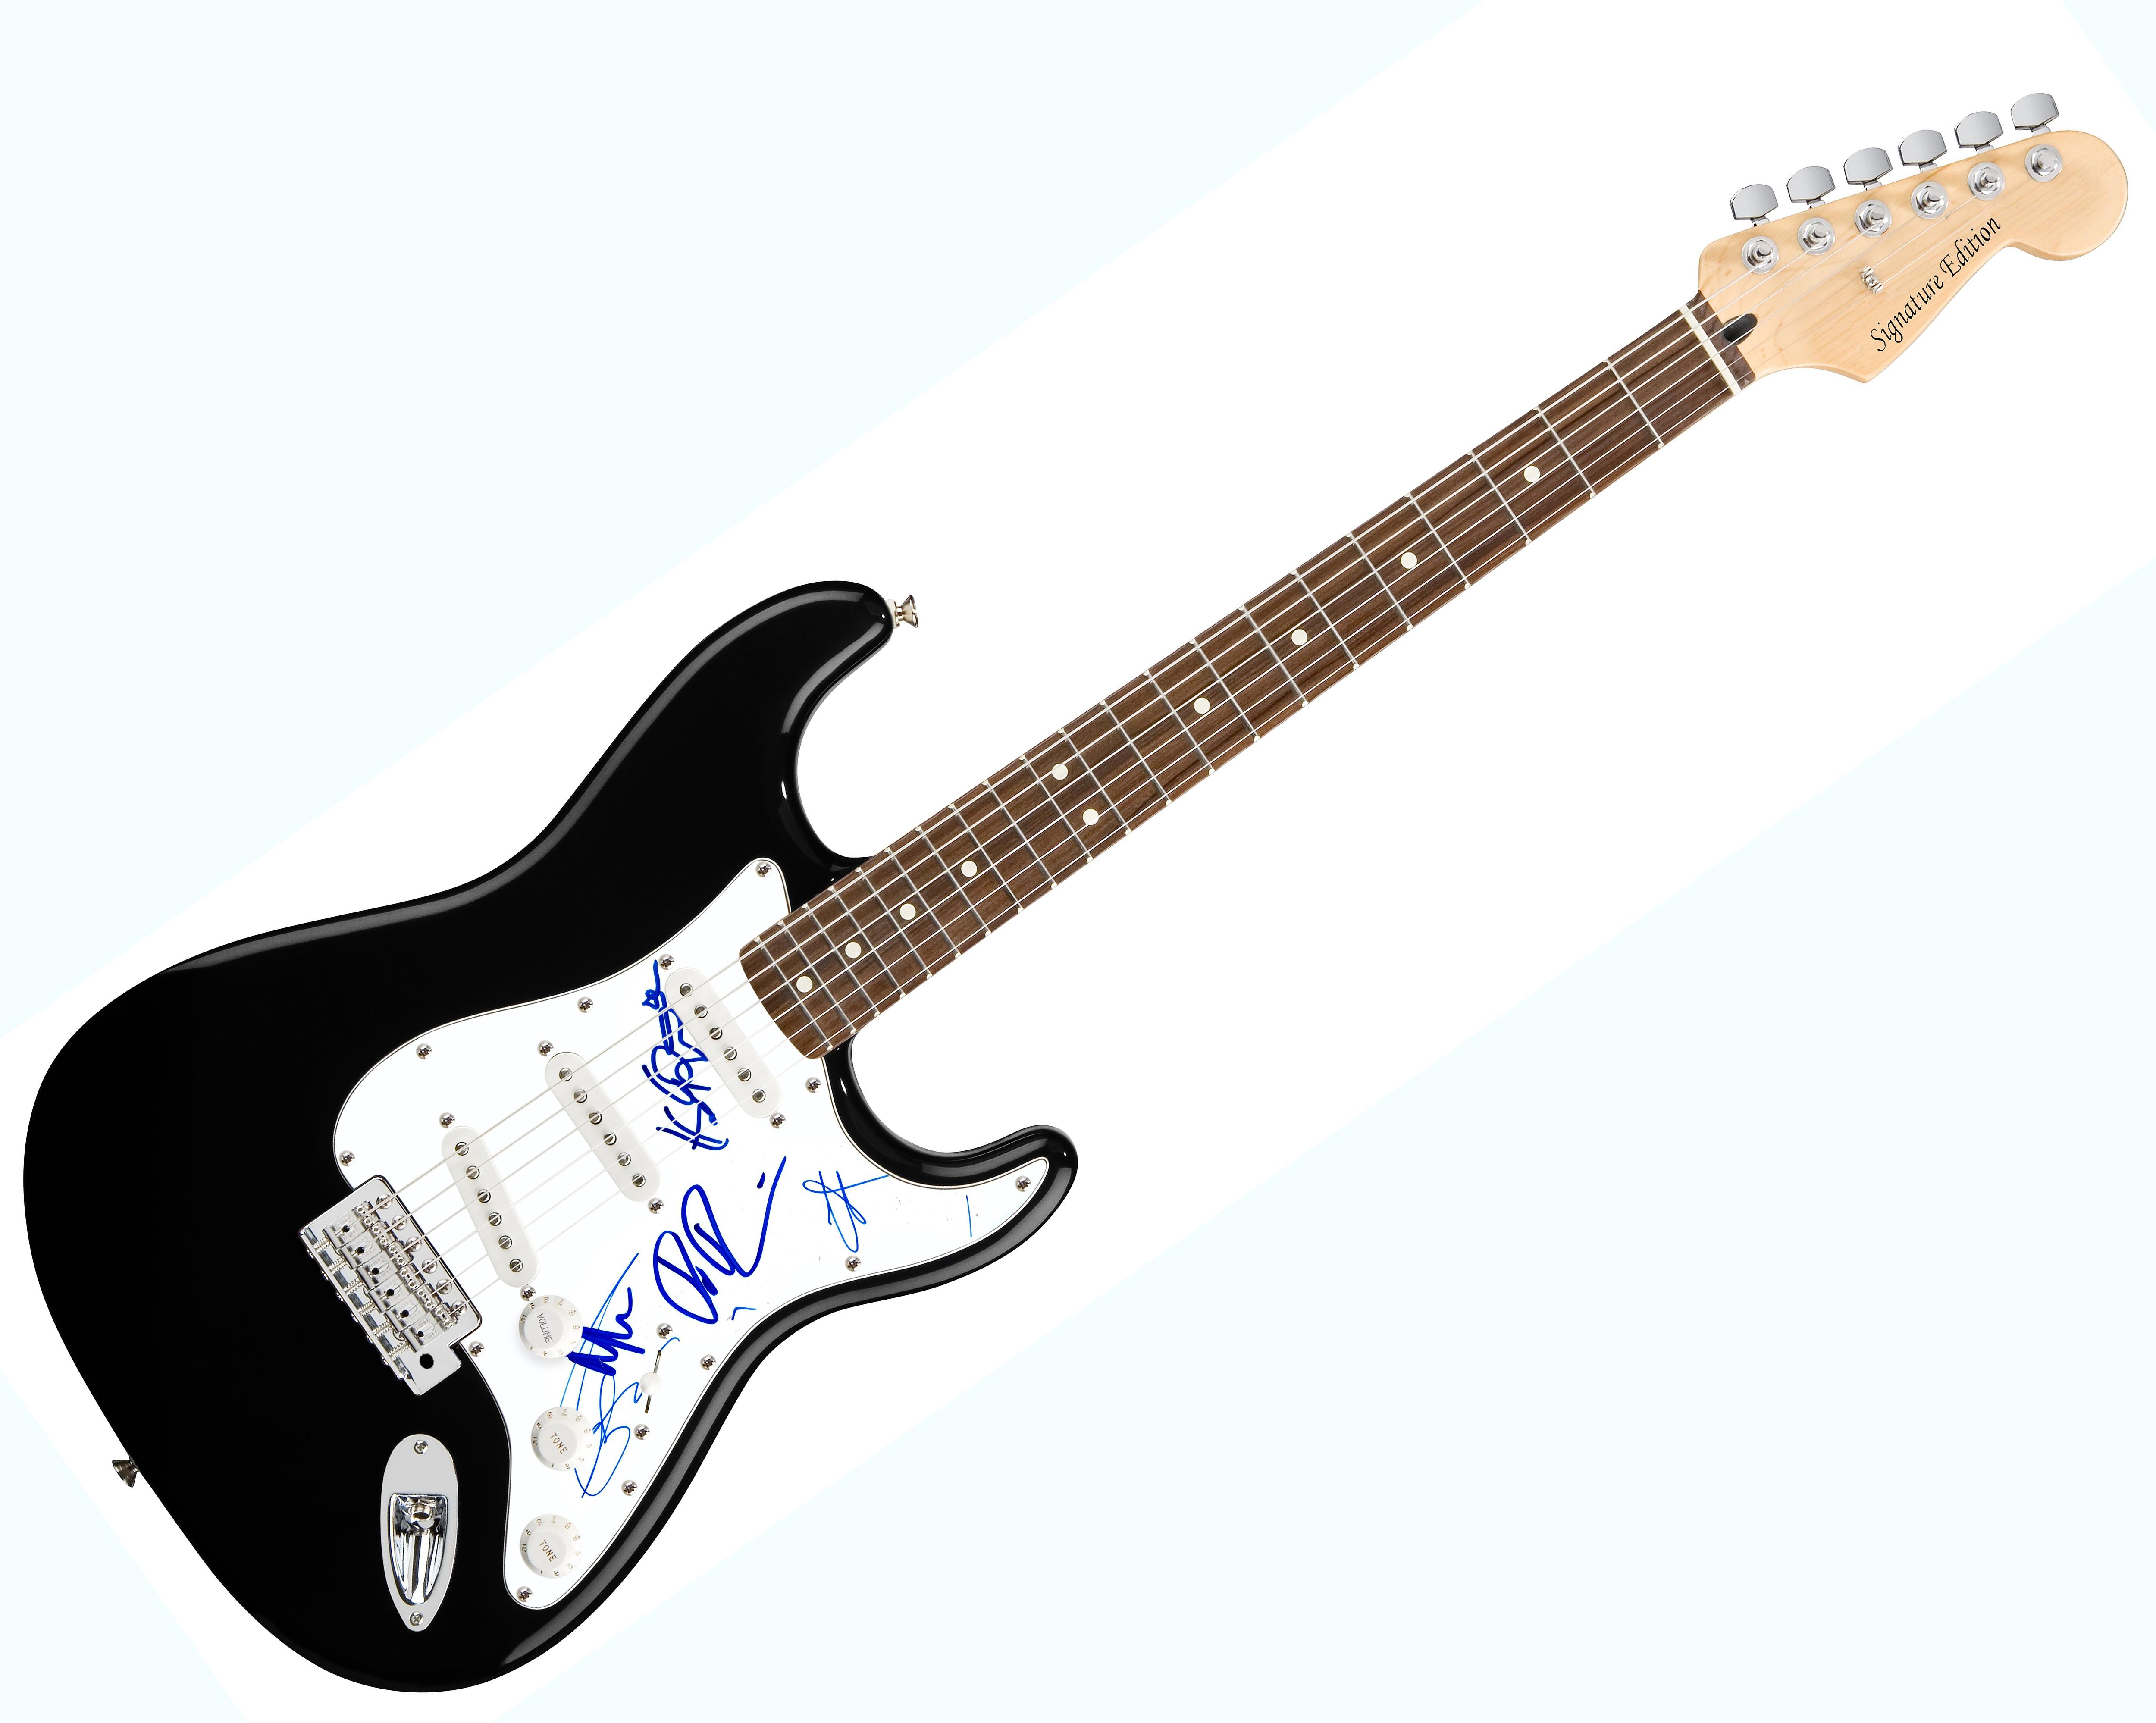 Squier mm stratocaster. Электрогитара Fender Stratocaster. Гитара Фендер стратокастер. Электрогитара Fender American professional Stratocaster. Фендер стратокастер черный.